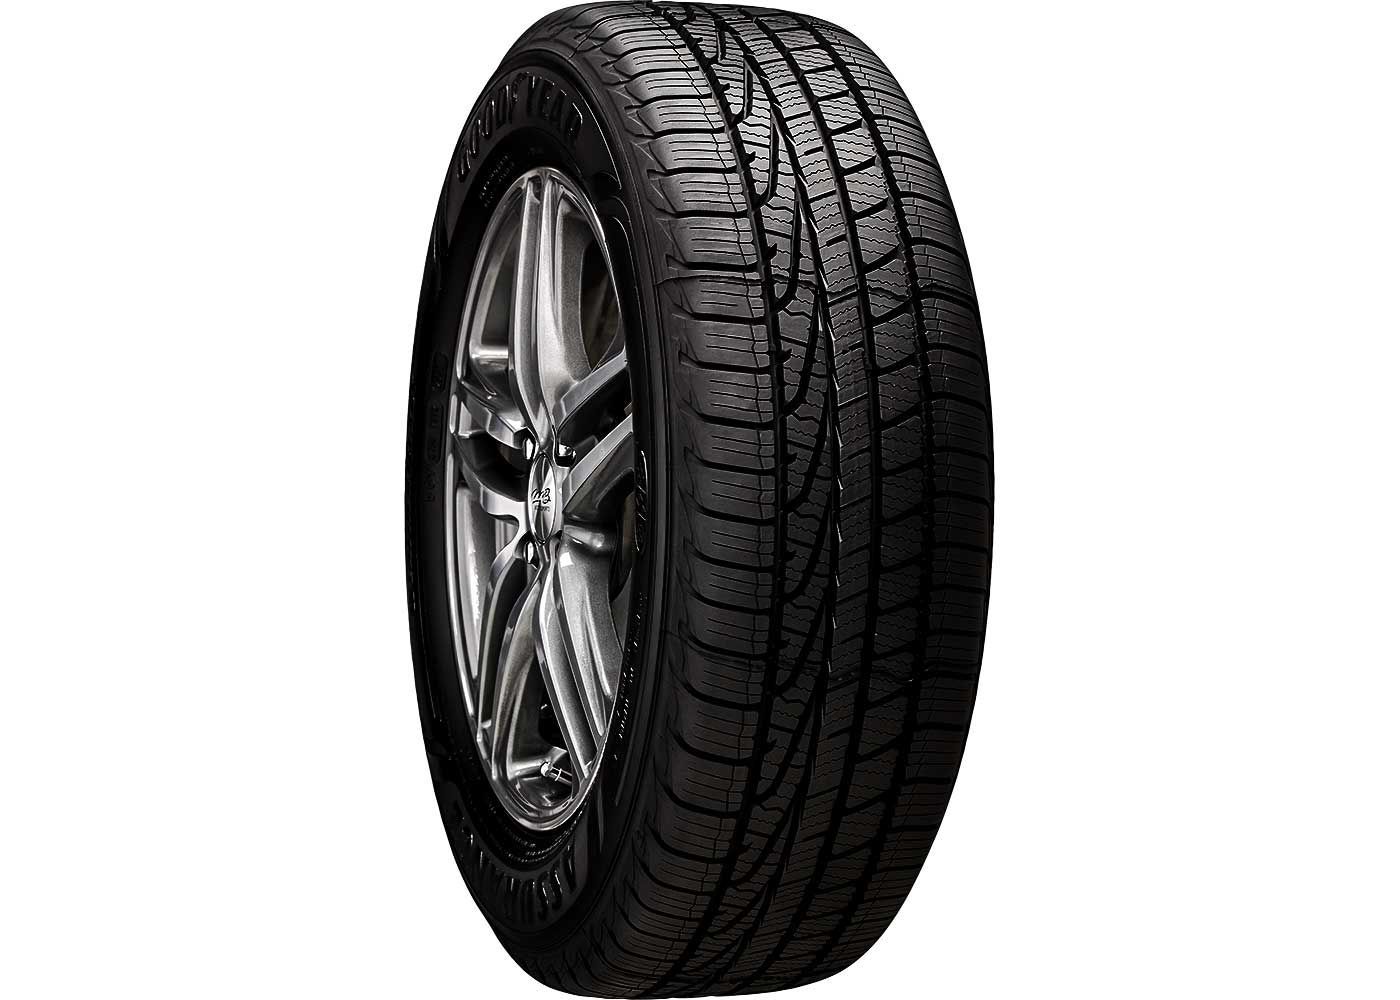 goodyear assurance weatherready all season tire for snow